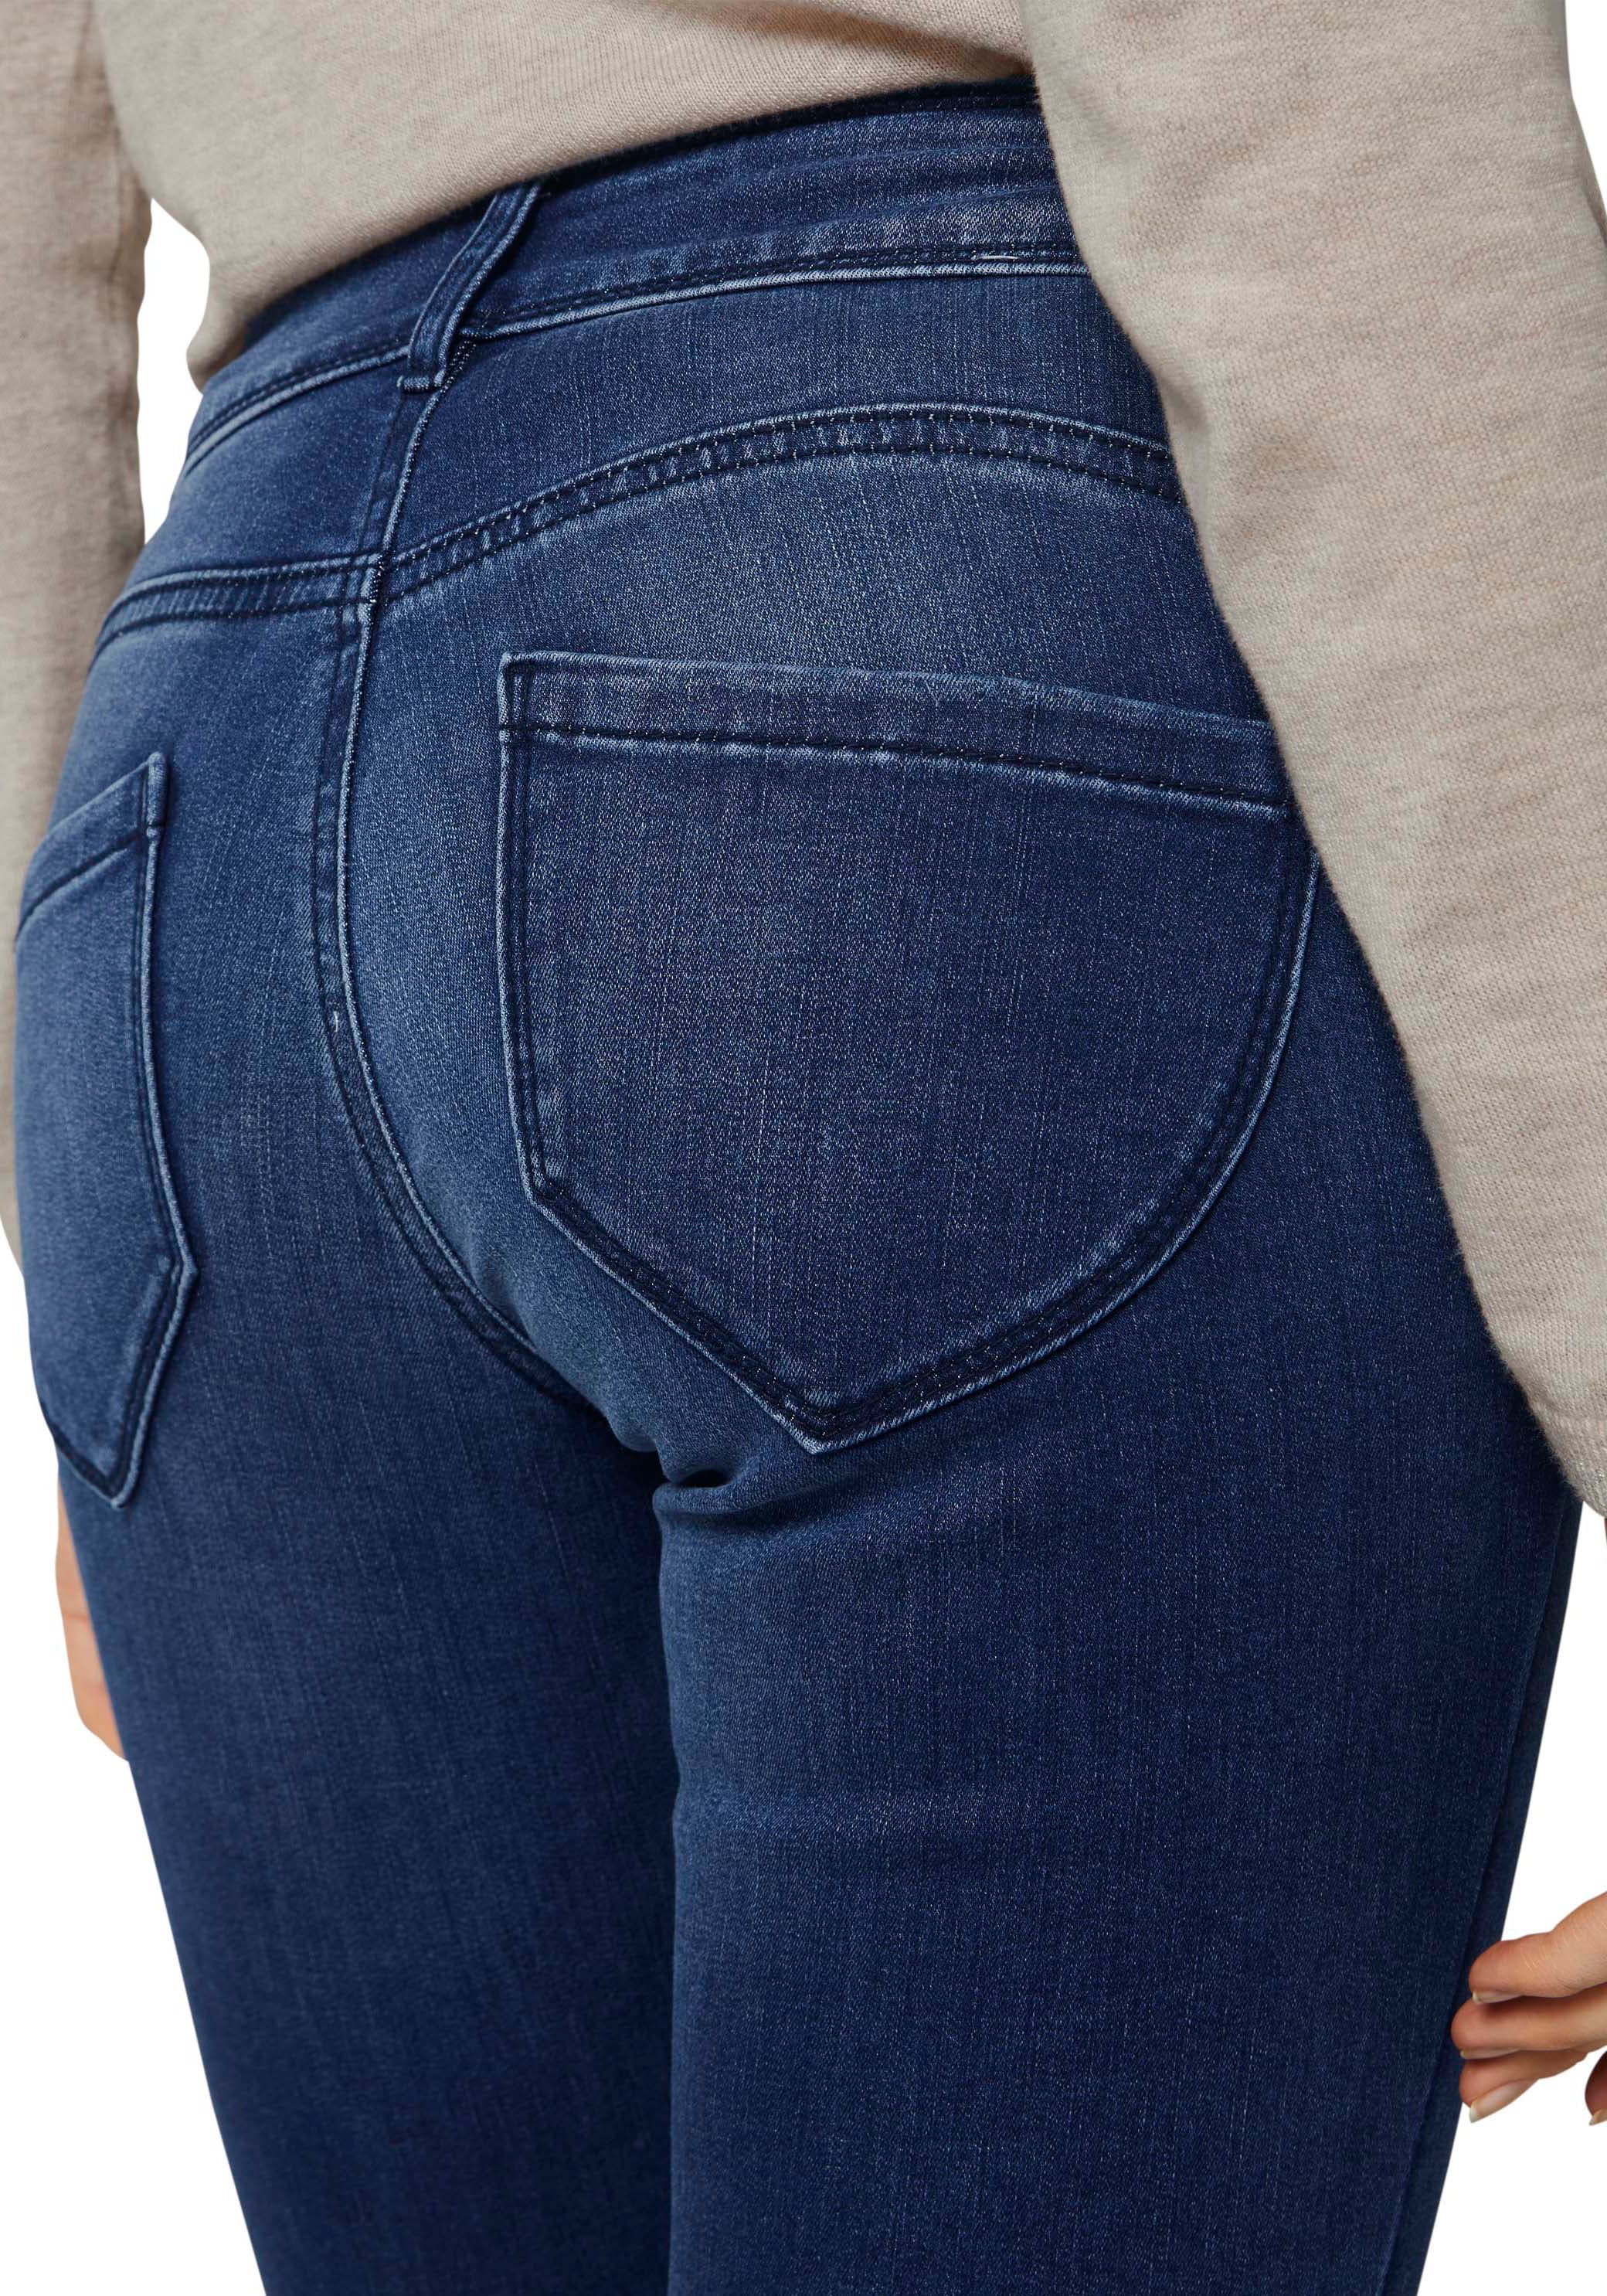 OTTOversand Skinny«, Skinny-fit-Jeans mit »Alexa Doppelknopf-Verschluss TAILOR TOM bei